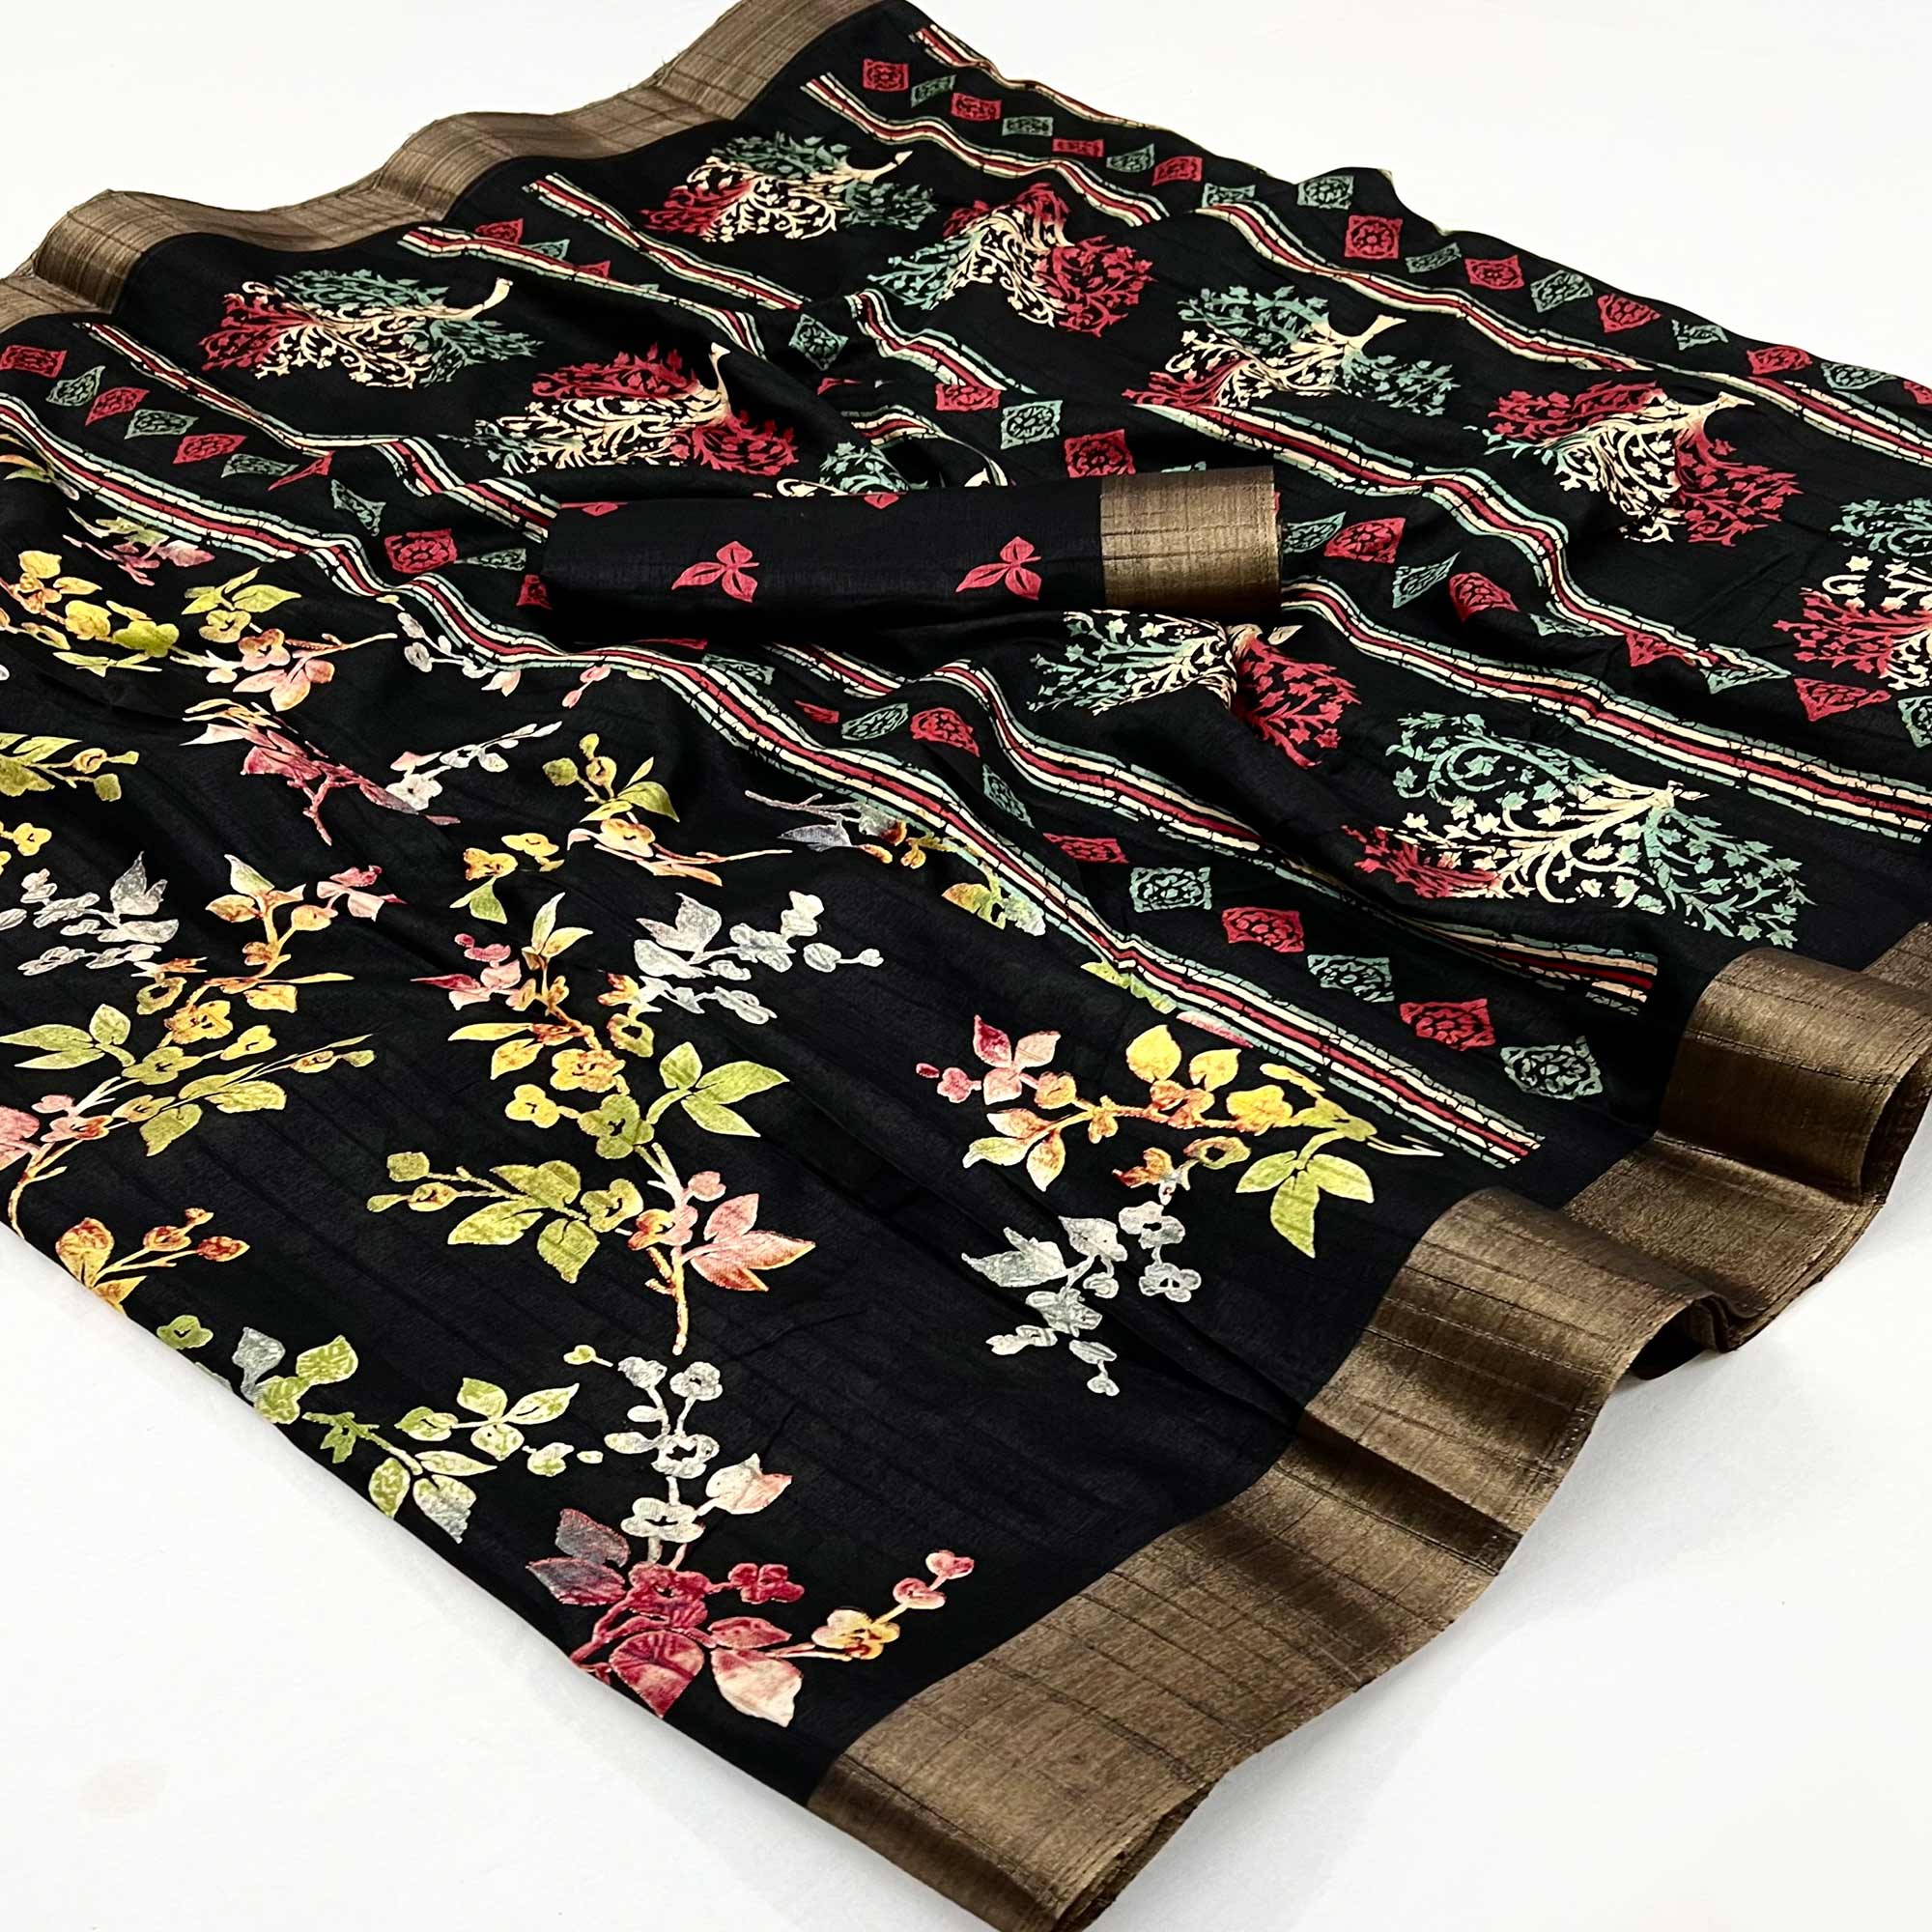 Black Floral Printed Cotton Silk Saree